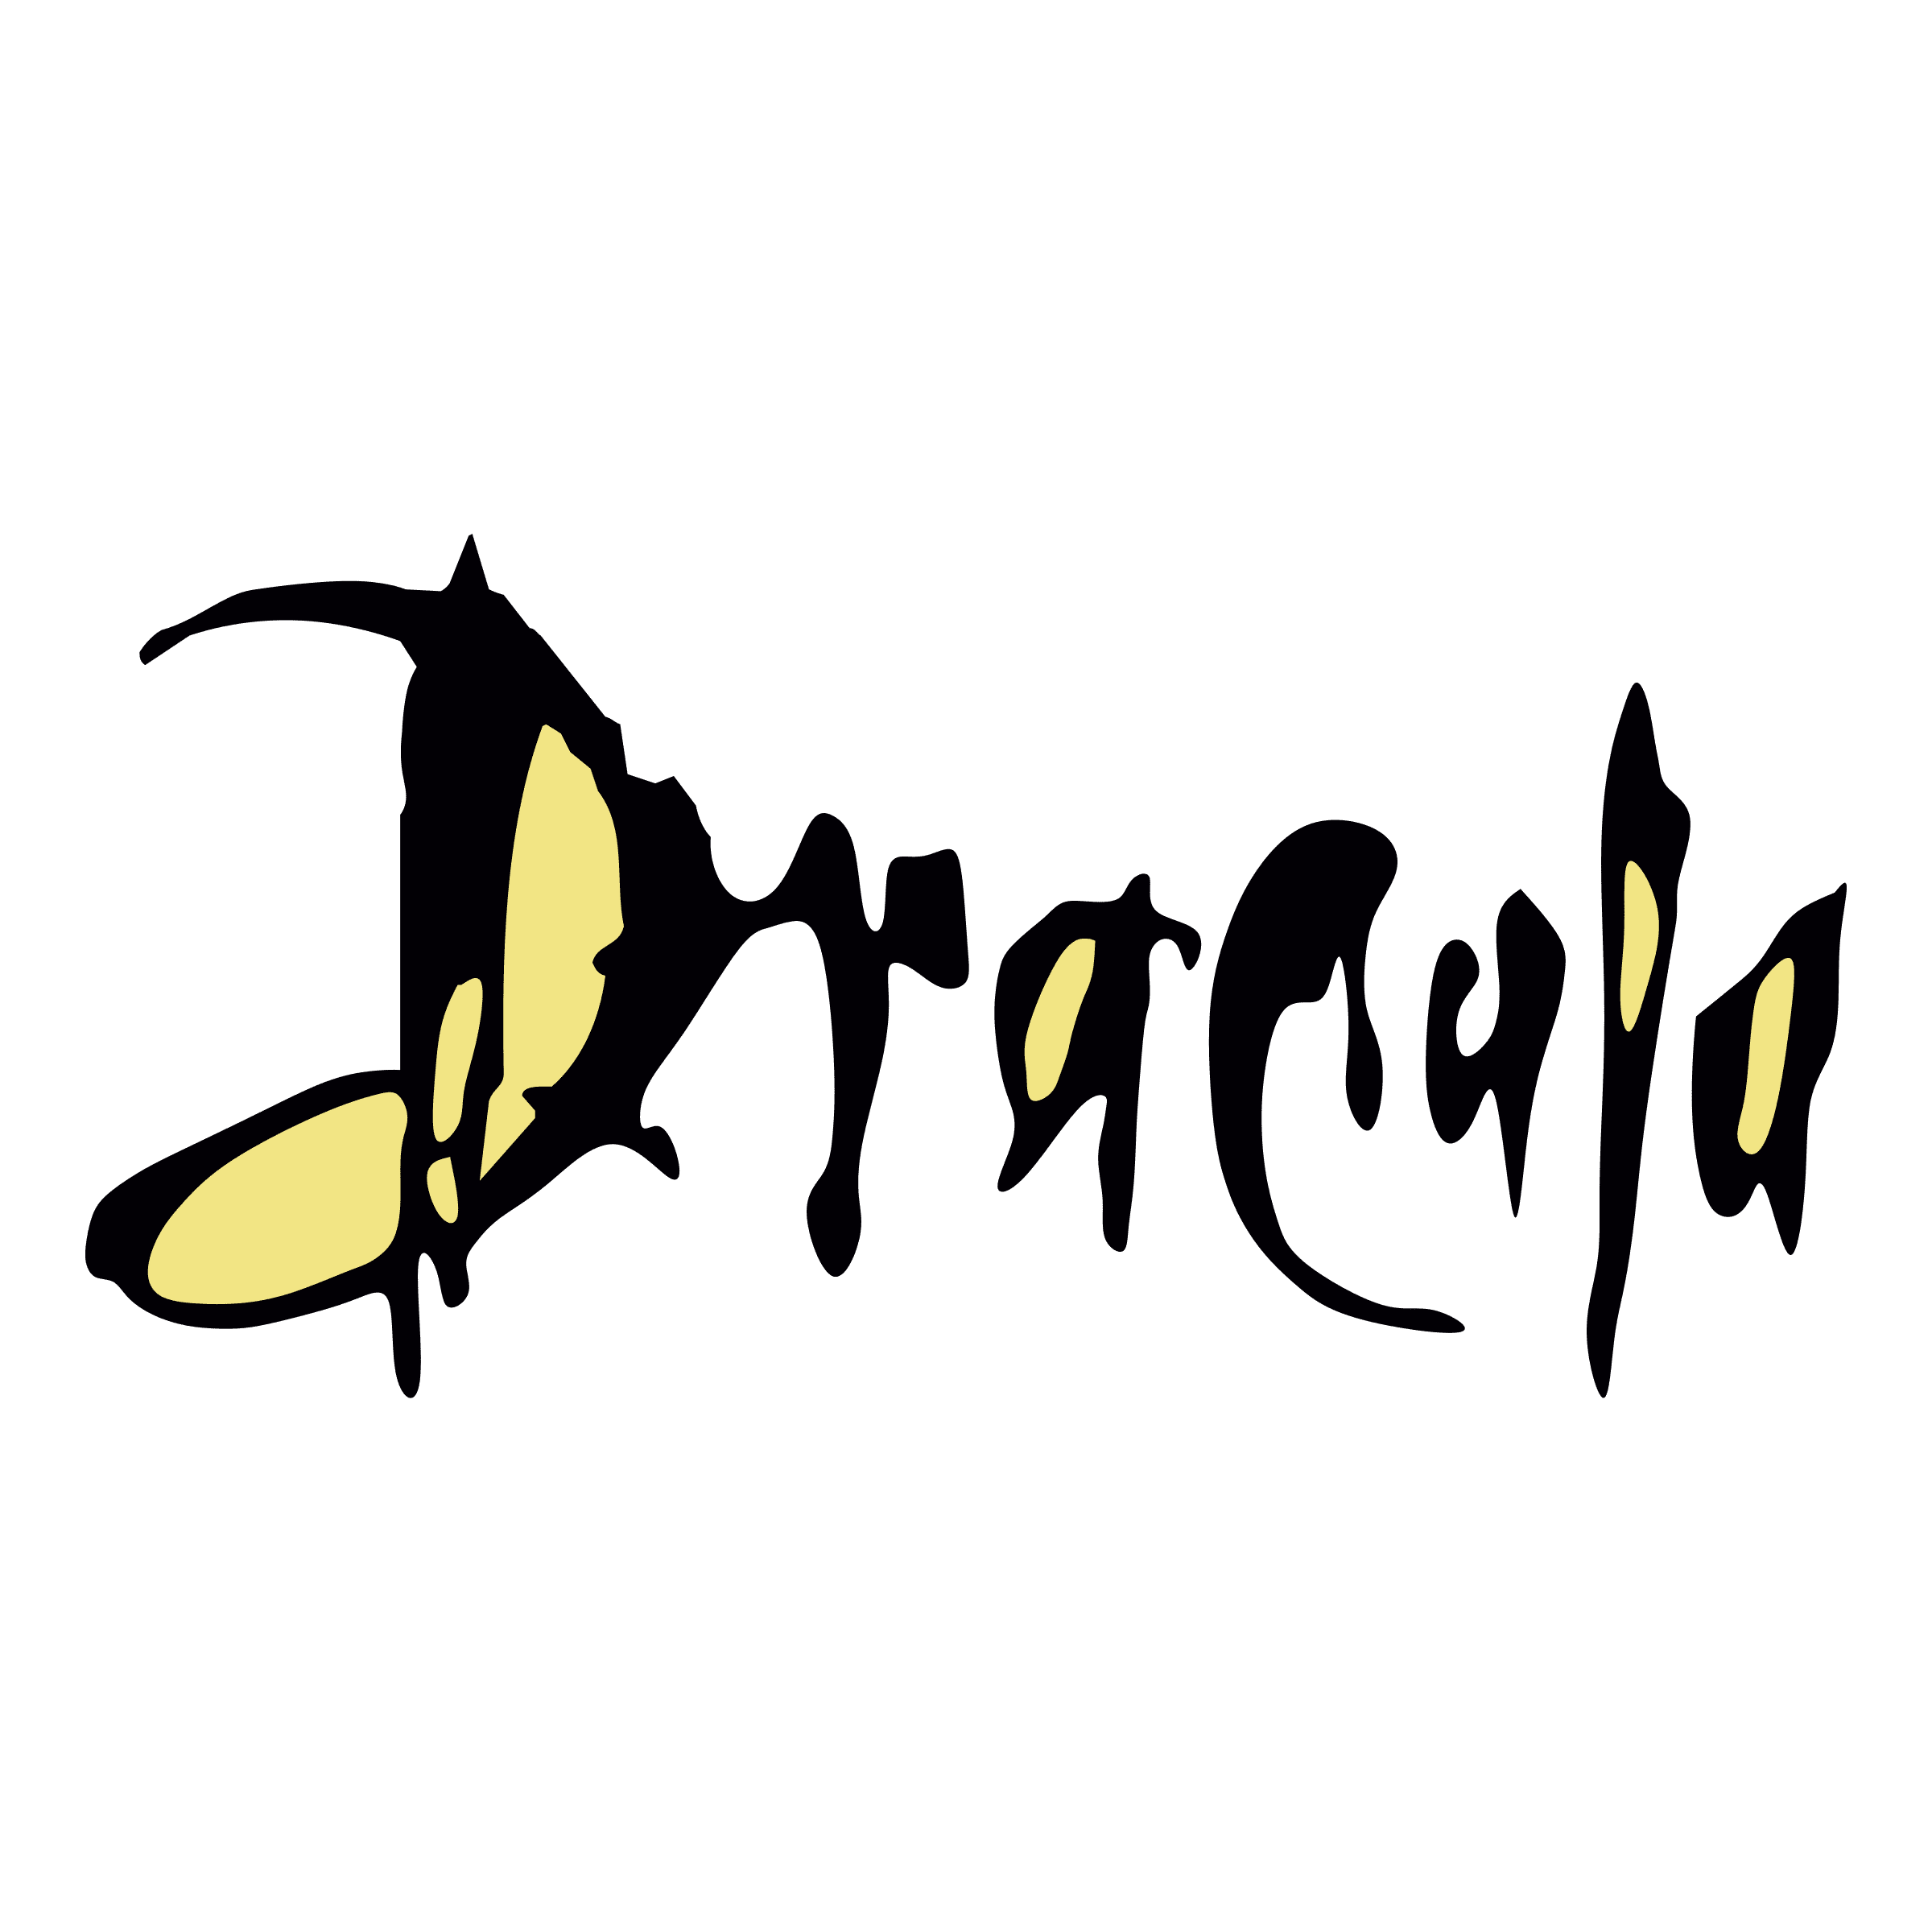 dracula-1-logo-png-transparent